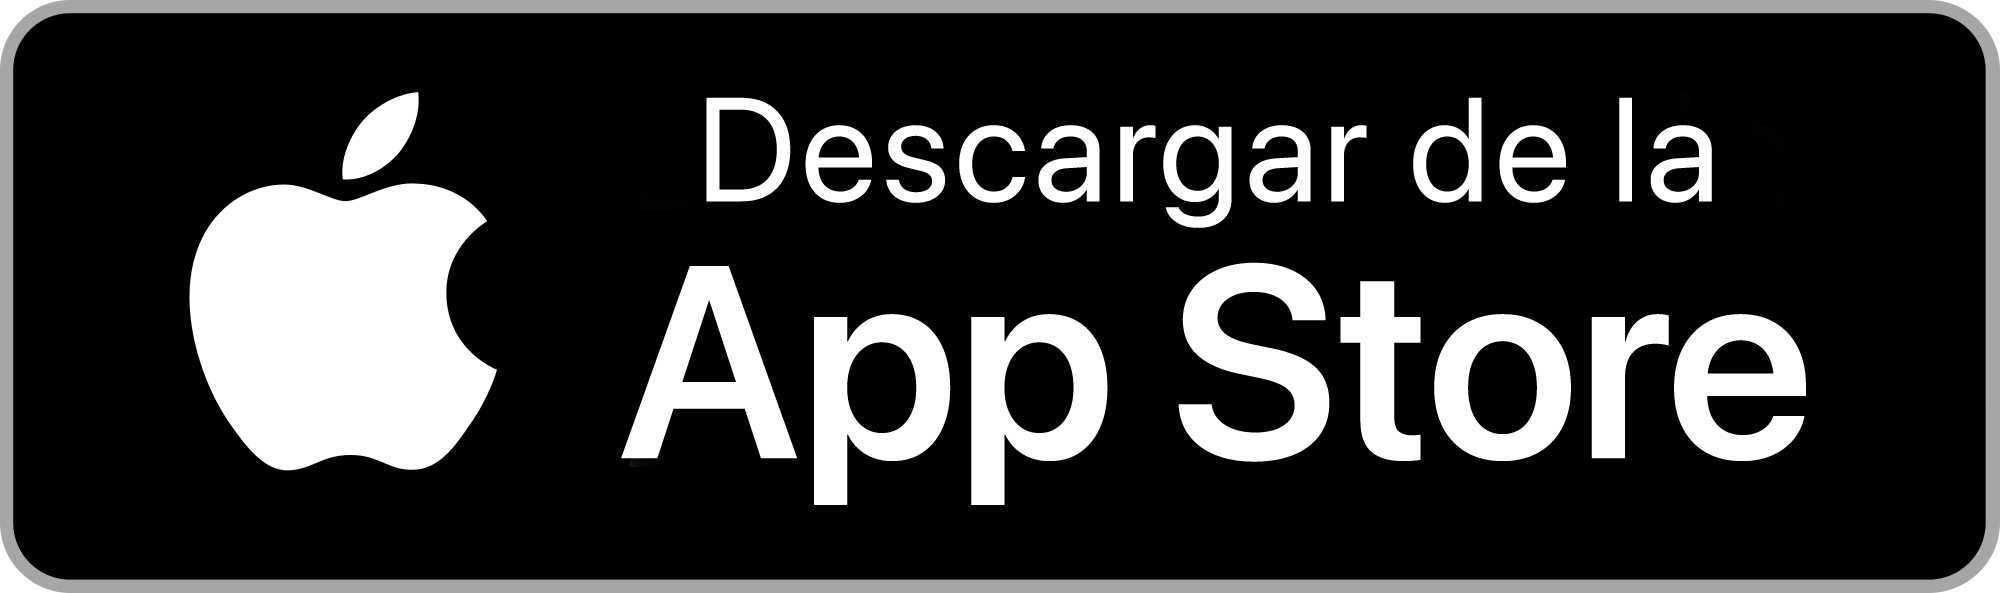 Apple-App-Store-Descarga_CBP-One.png